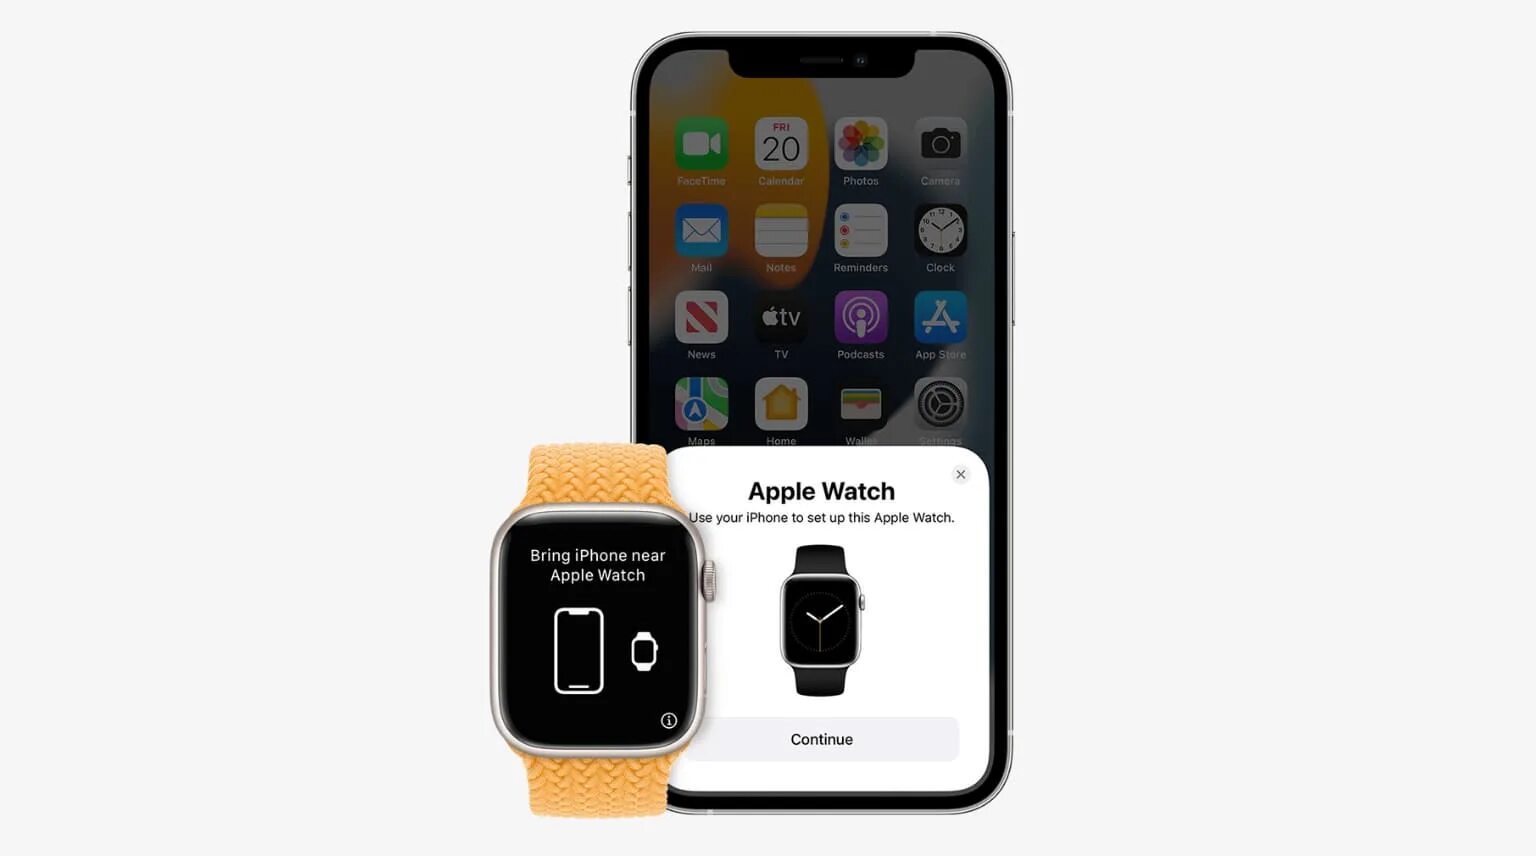 Часы эпл 7 выключенные. Unpair Apple watch. Bring iphone near Apple watch. Разорвать пару с Apple watch с iphone. Как выключить часы apple